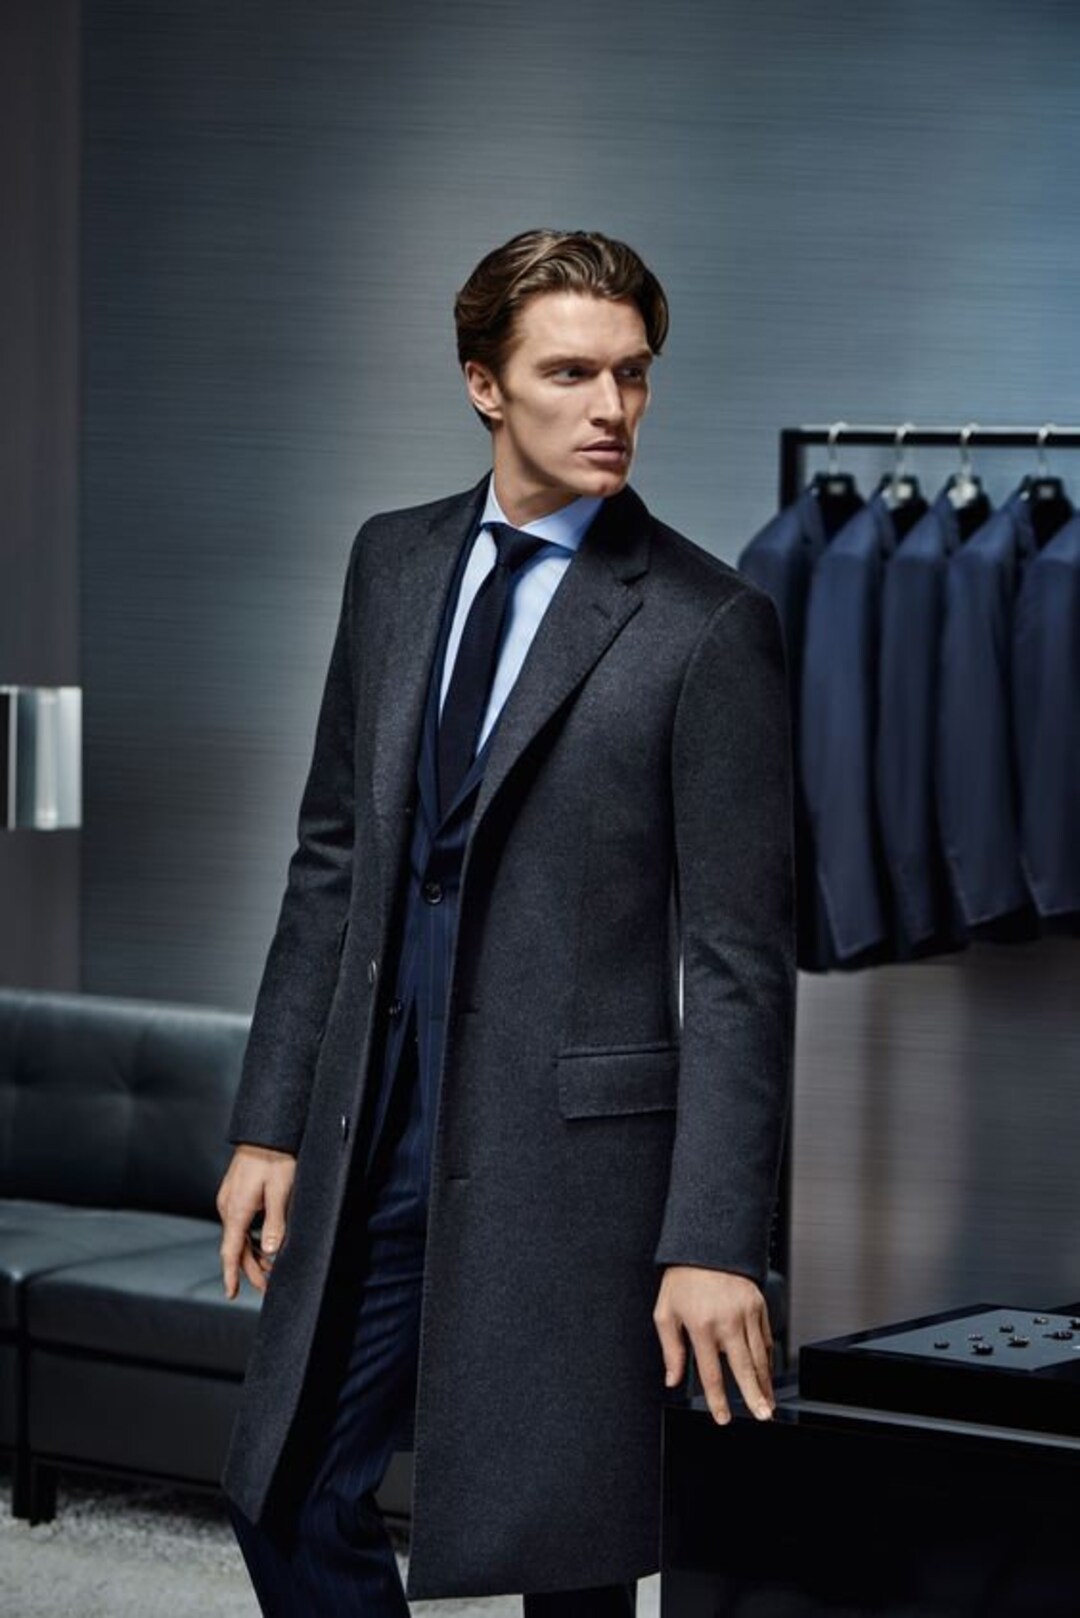 Men Black Overcoat Vintage Long Trench Coat Men New Jacket - Etsy